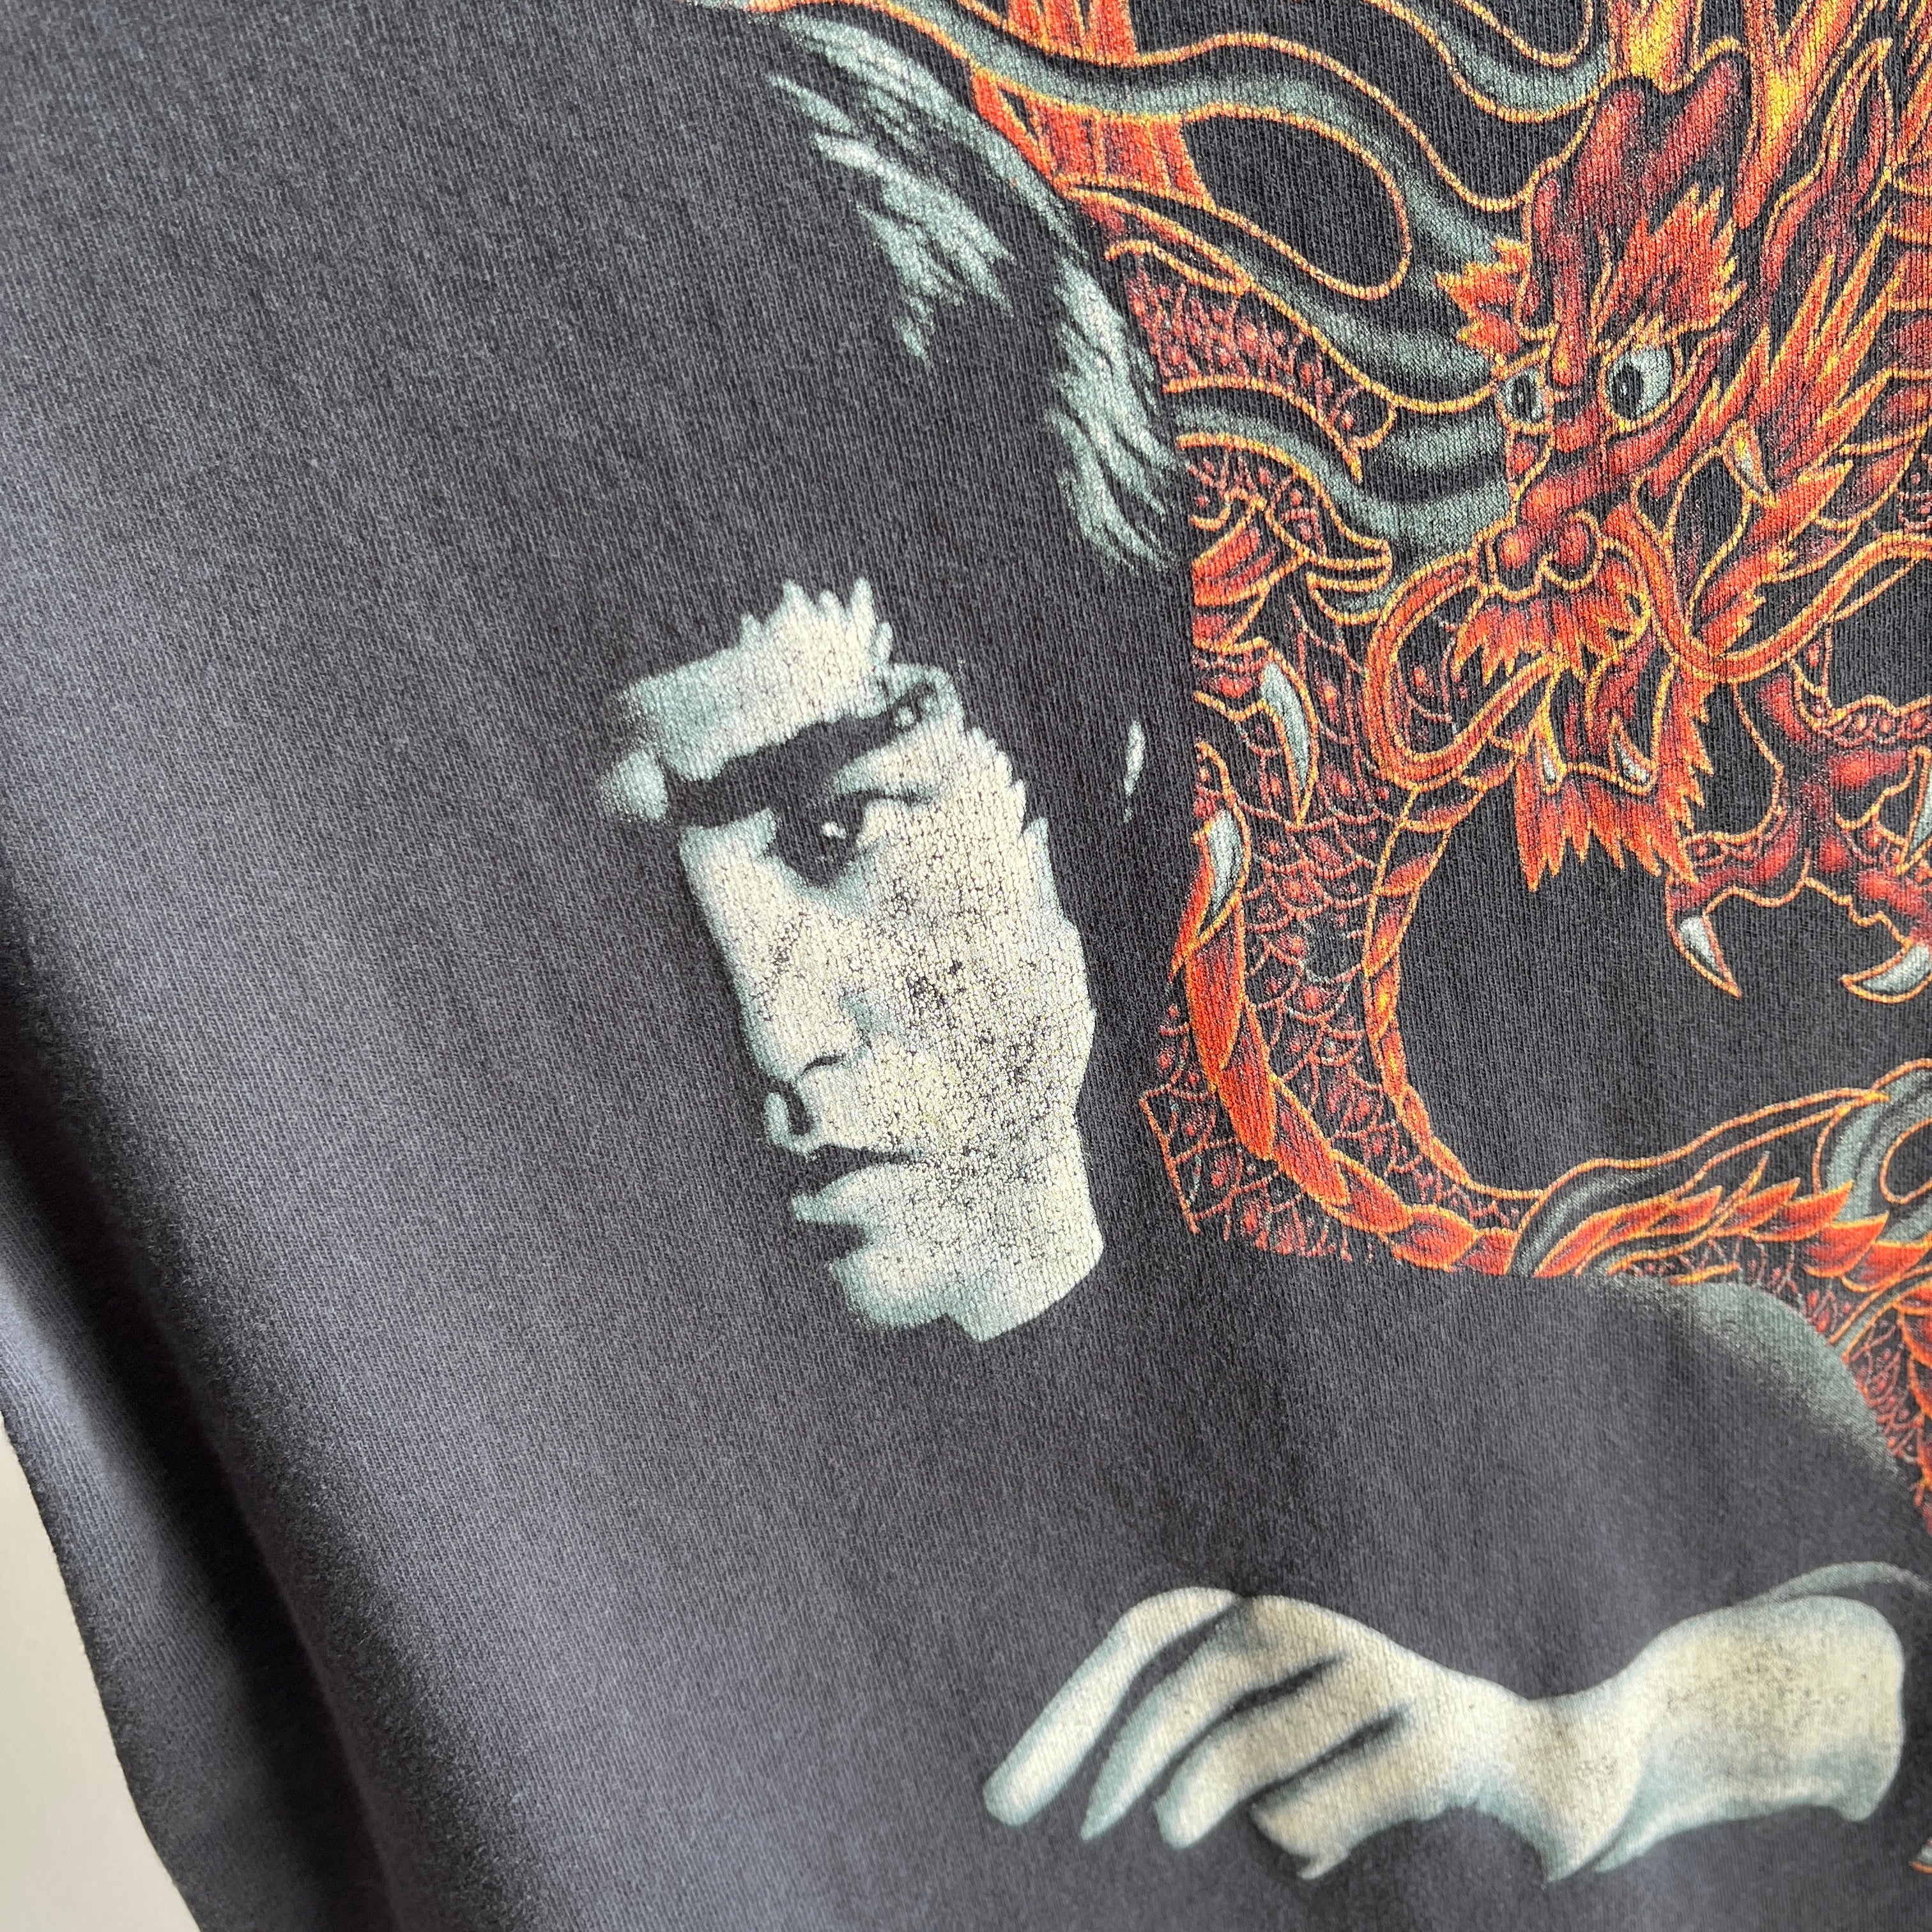 2000 Bruce Lee Dragon Shadows Smaller T-Shirt (Great Gift)